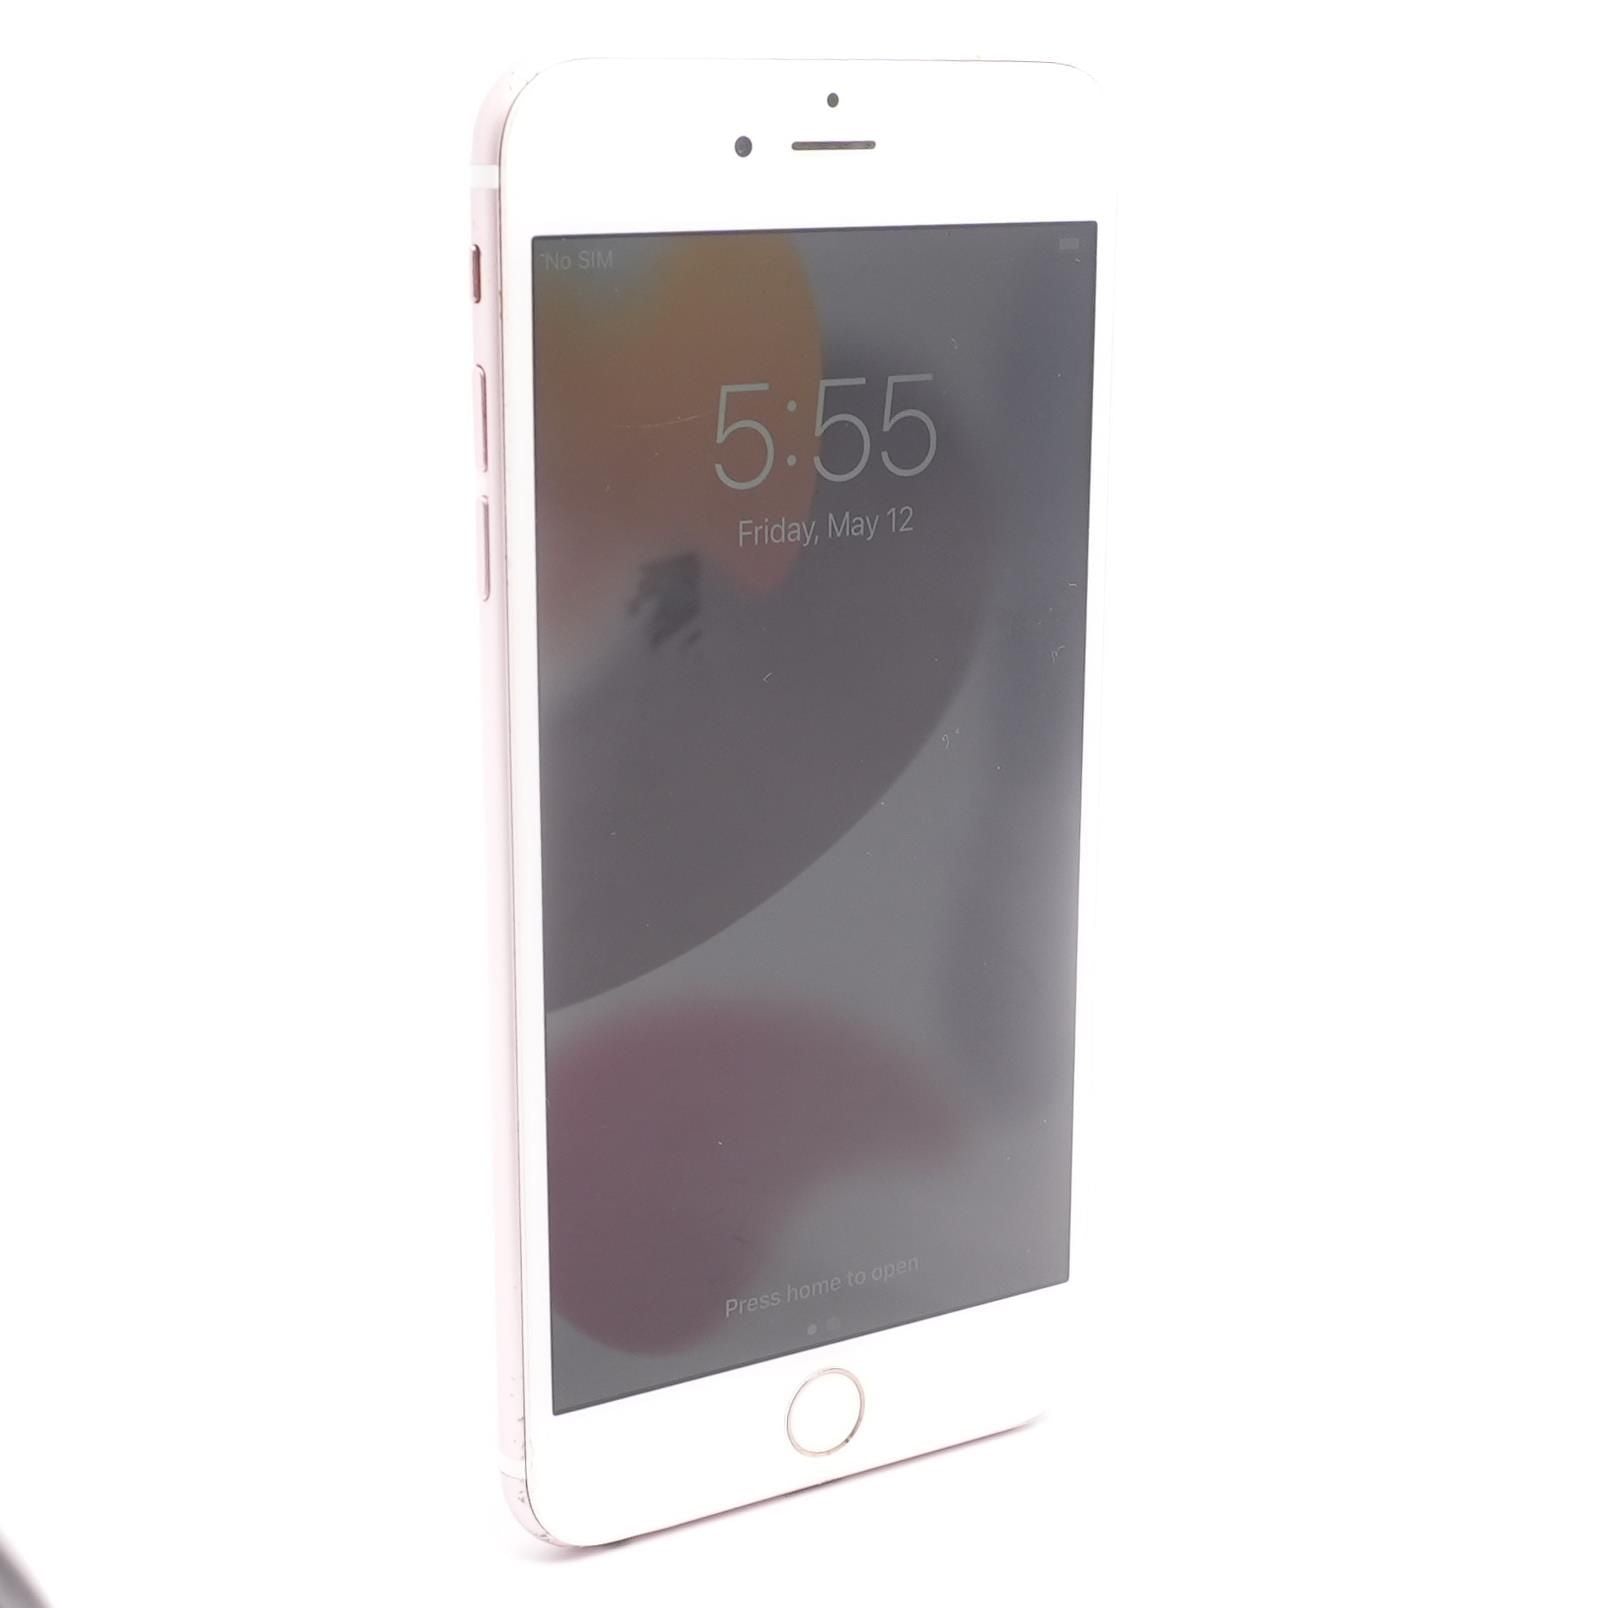 Apple iPhone 6s 16GB rosegold Handy